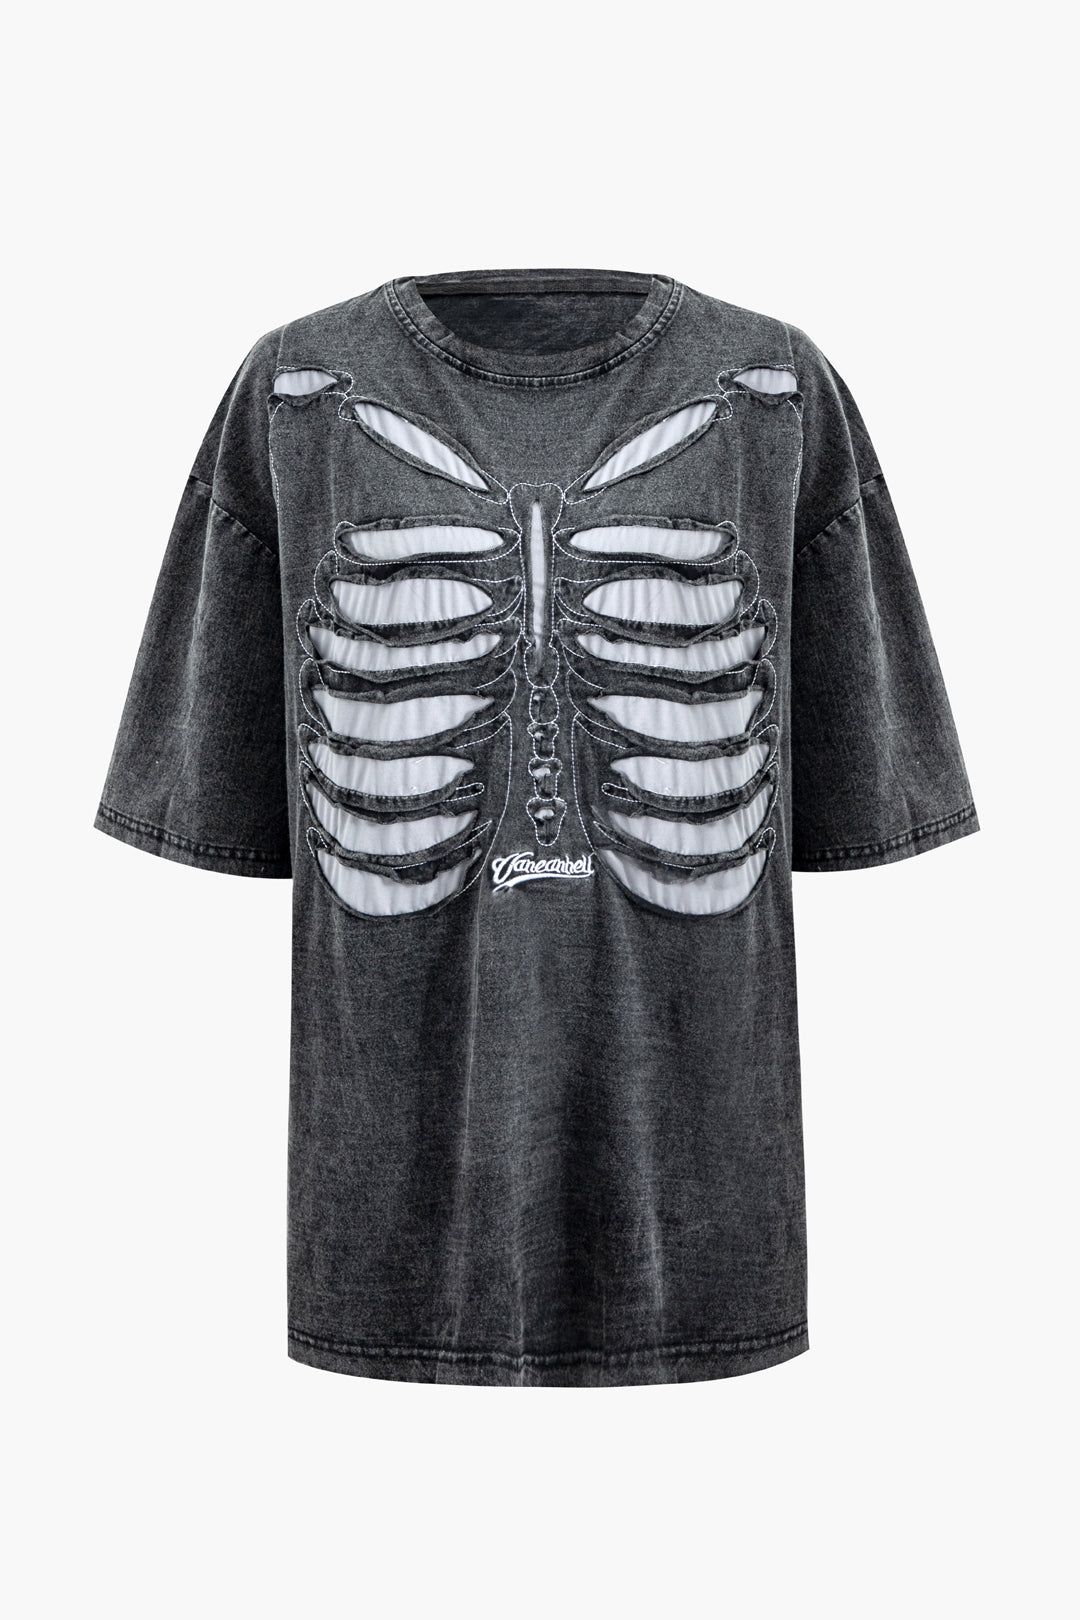 Skeleton Design Round Neck Distressed T-shirt